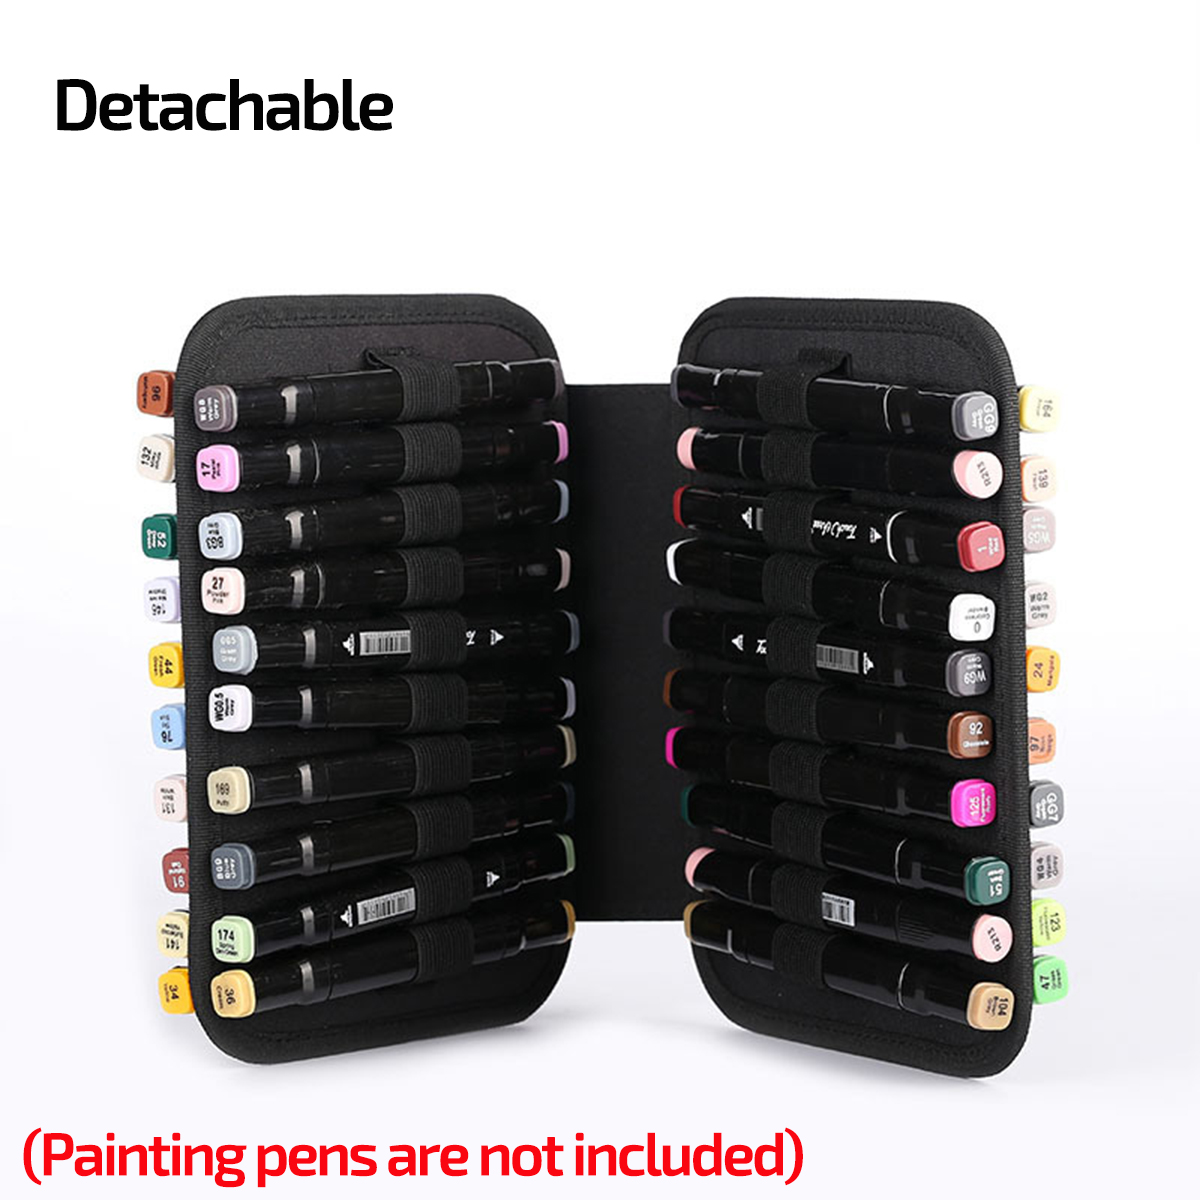 60-Colors-Large-Stationery-Marker-Pen-Storage-Bag-Pencil-Case-Organizer-Pouch-Holder-1577551-4